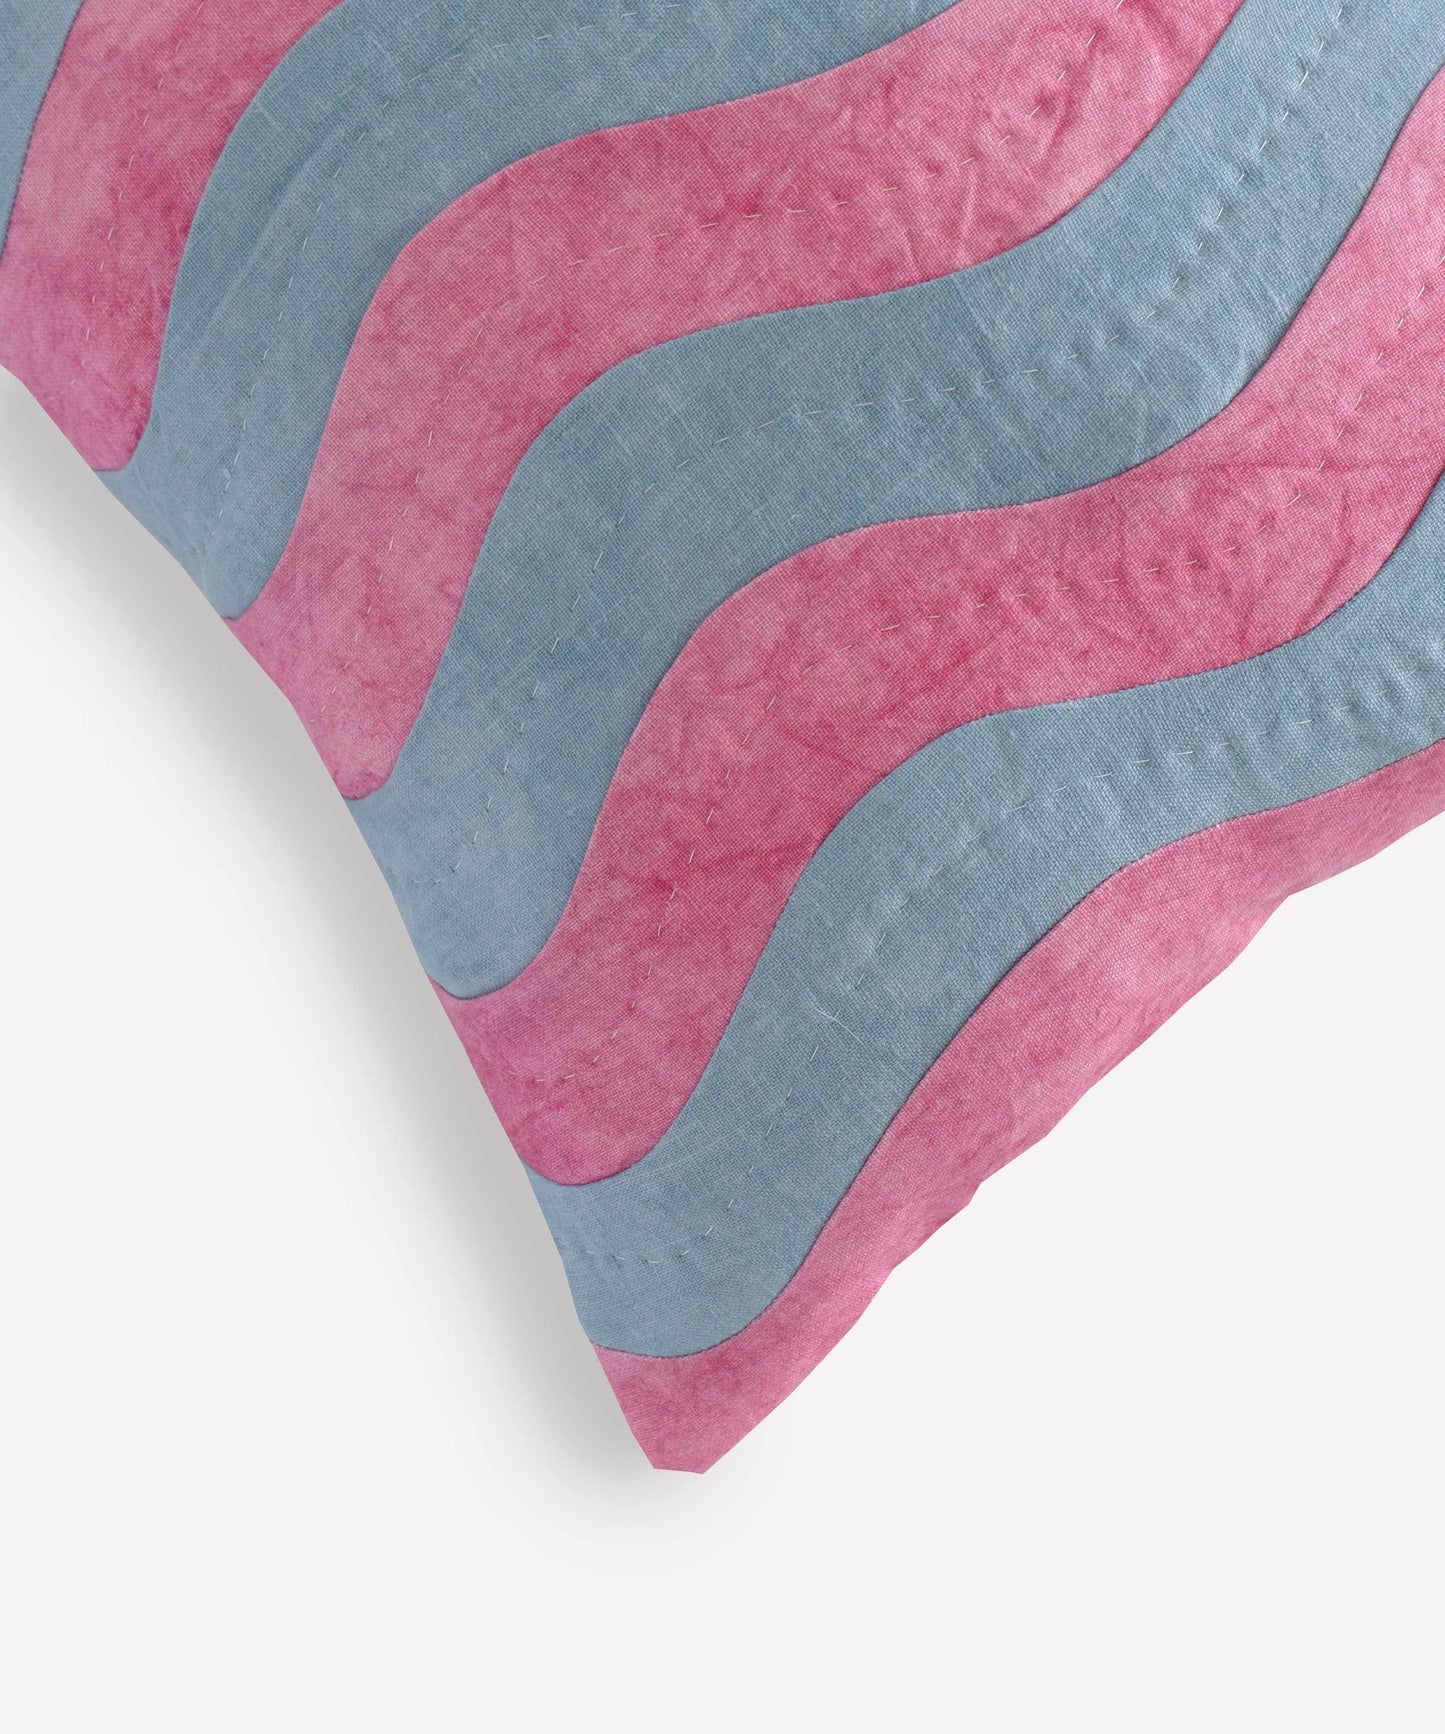 Square Pink & Grey Waves Cushion